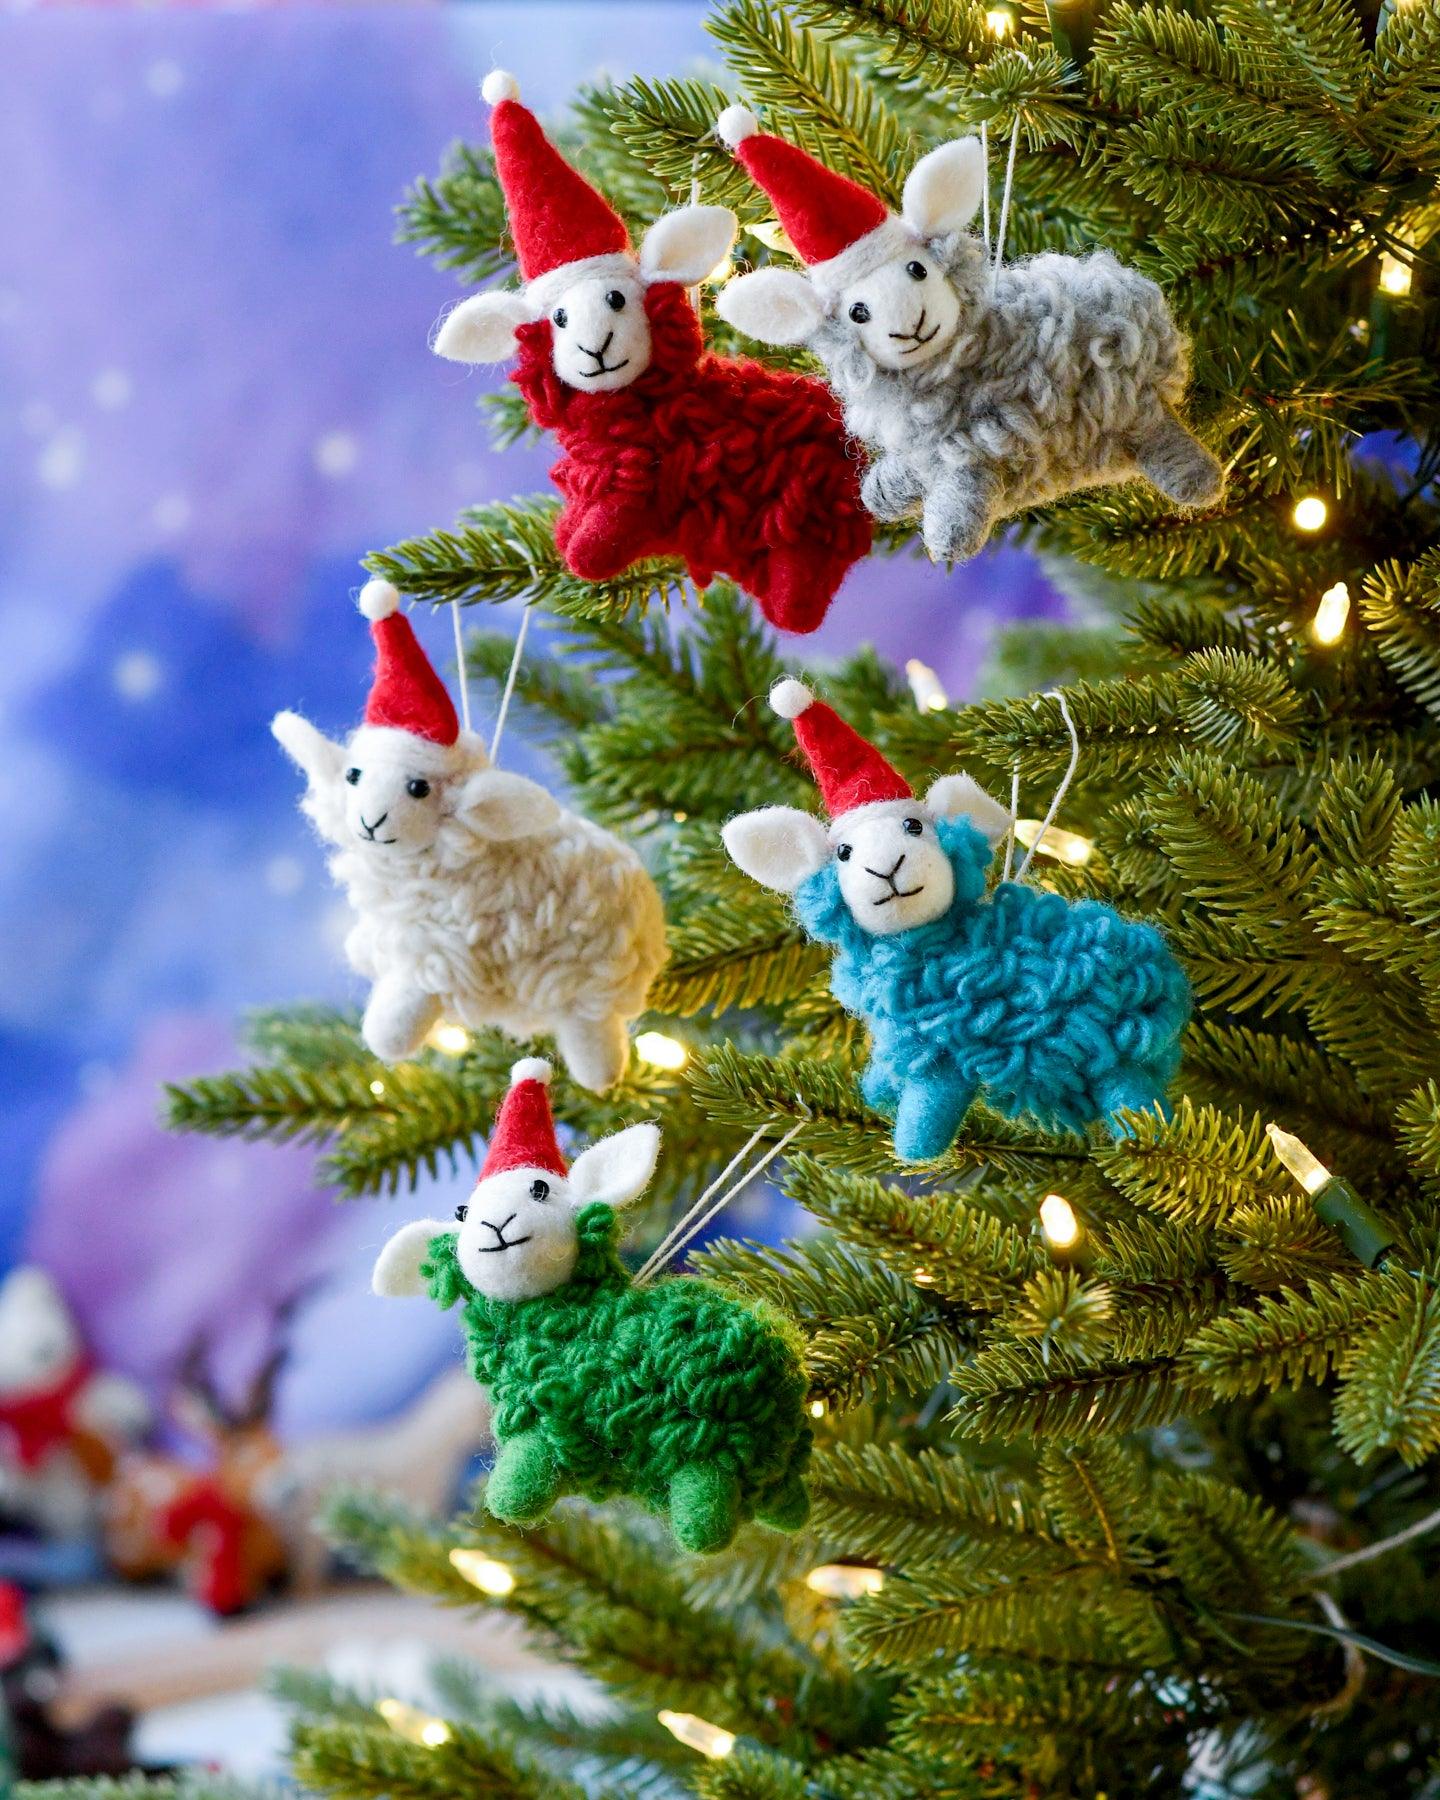 Felt White Sheep Christmas Ornament - Tara Treasures